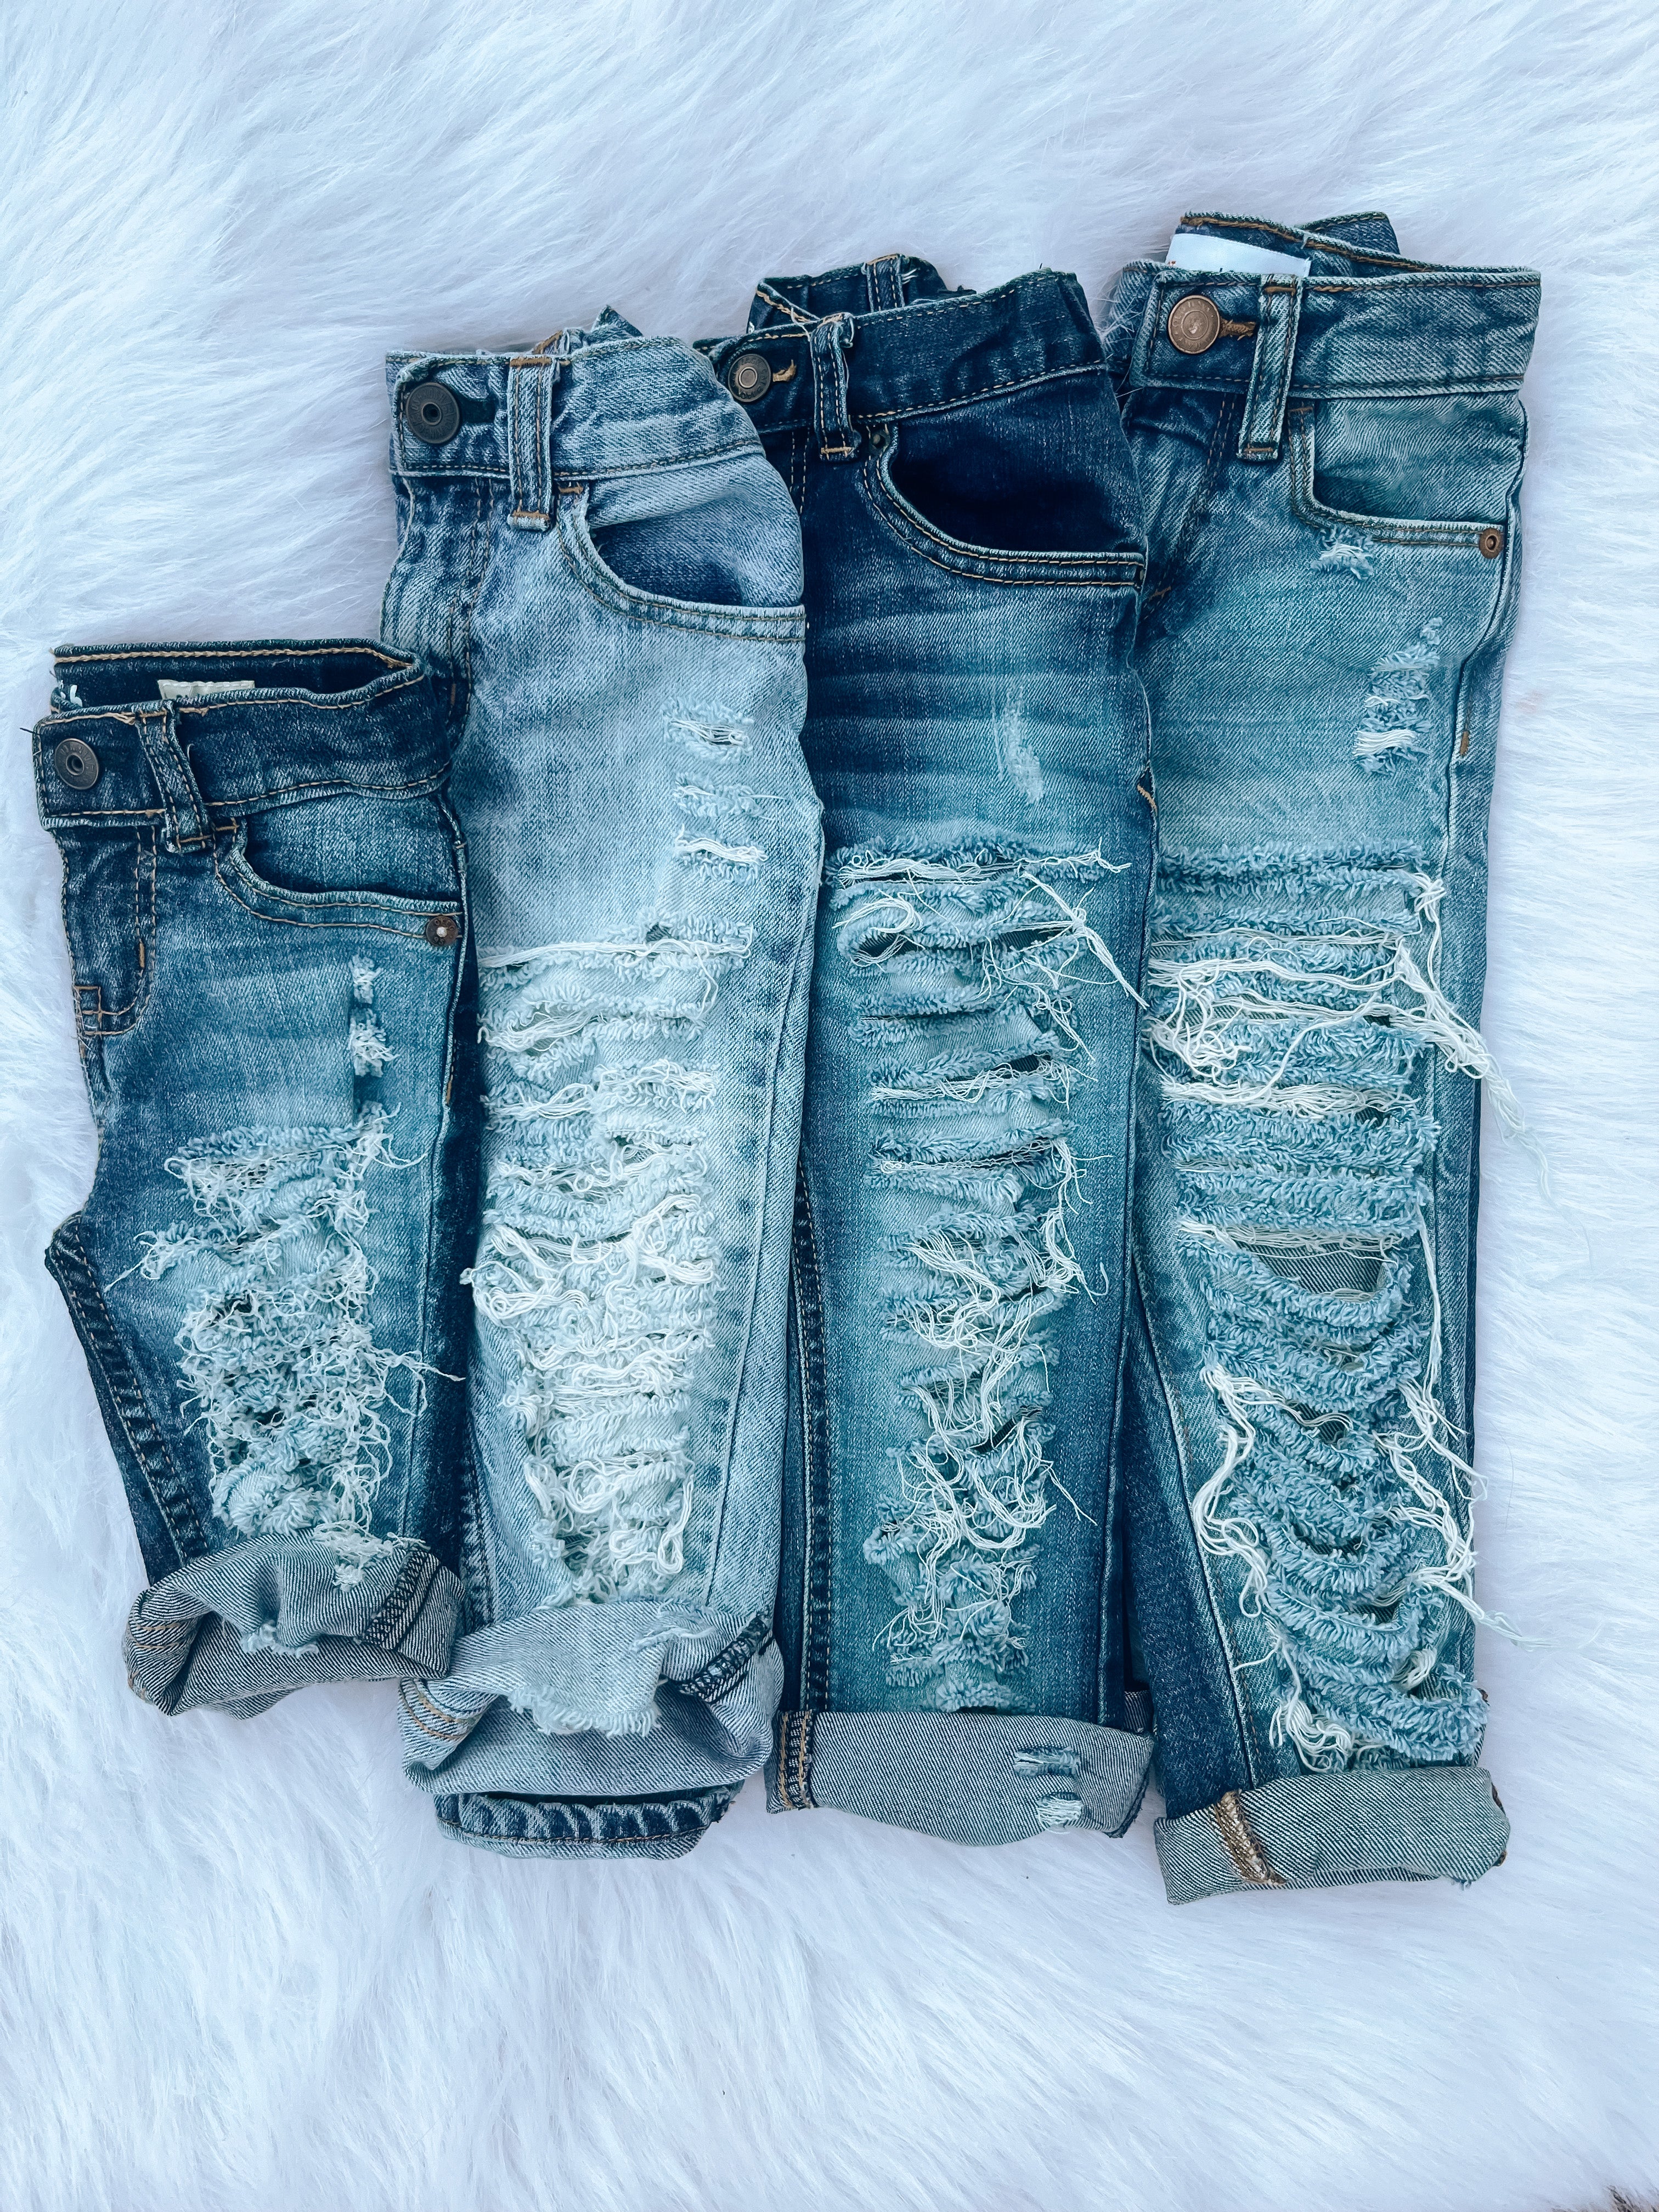 Deepika Padukone's Frazzle Jeans Grabs Attention - Boldsky.com